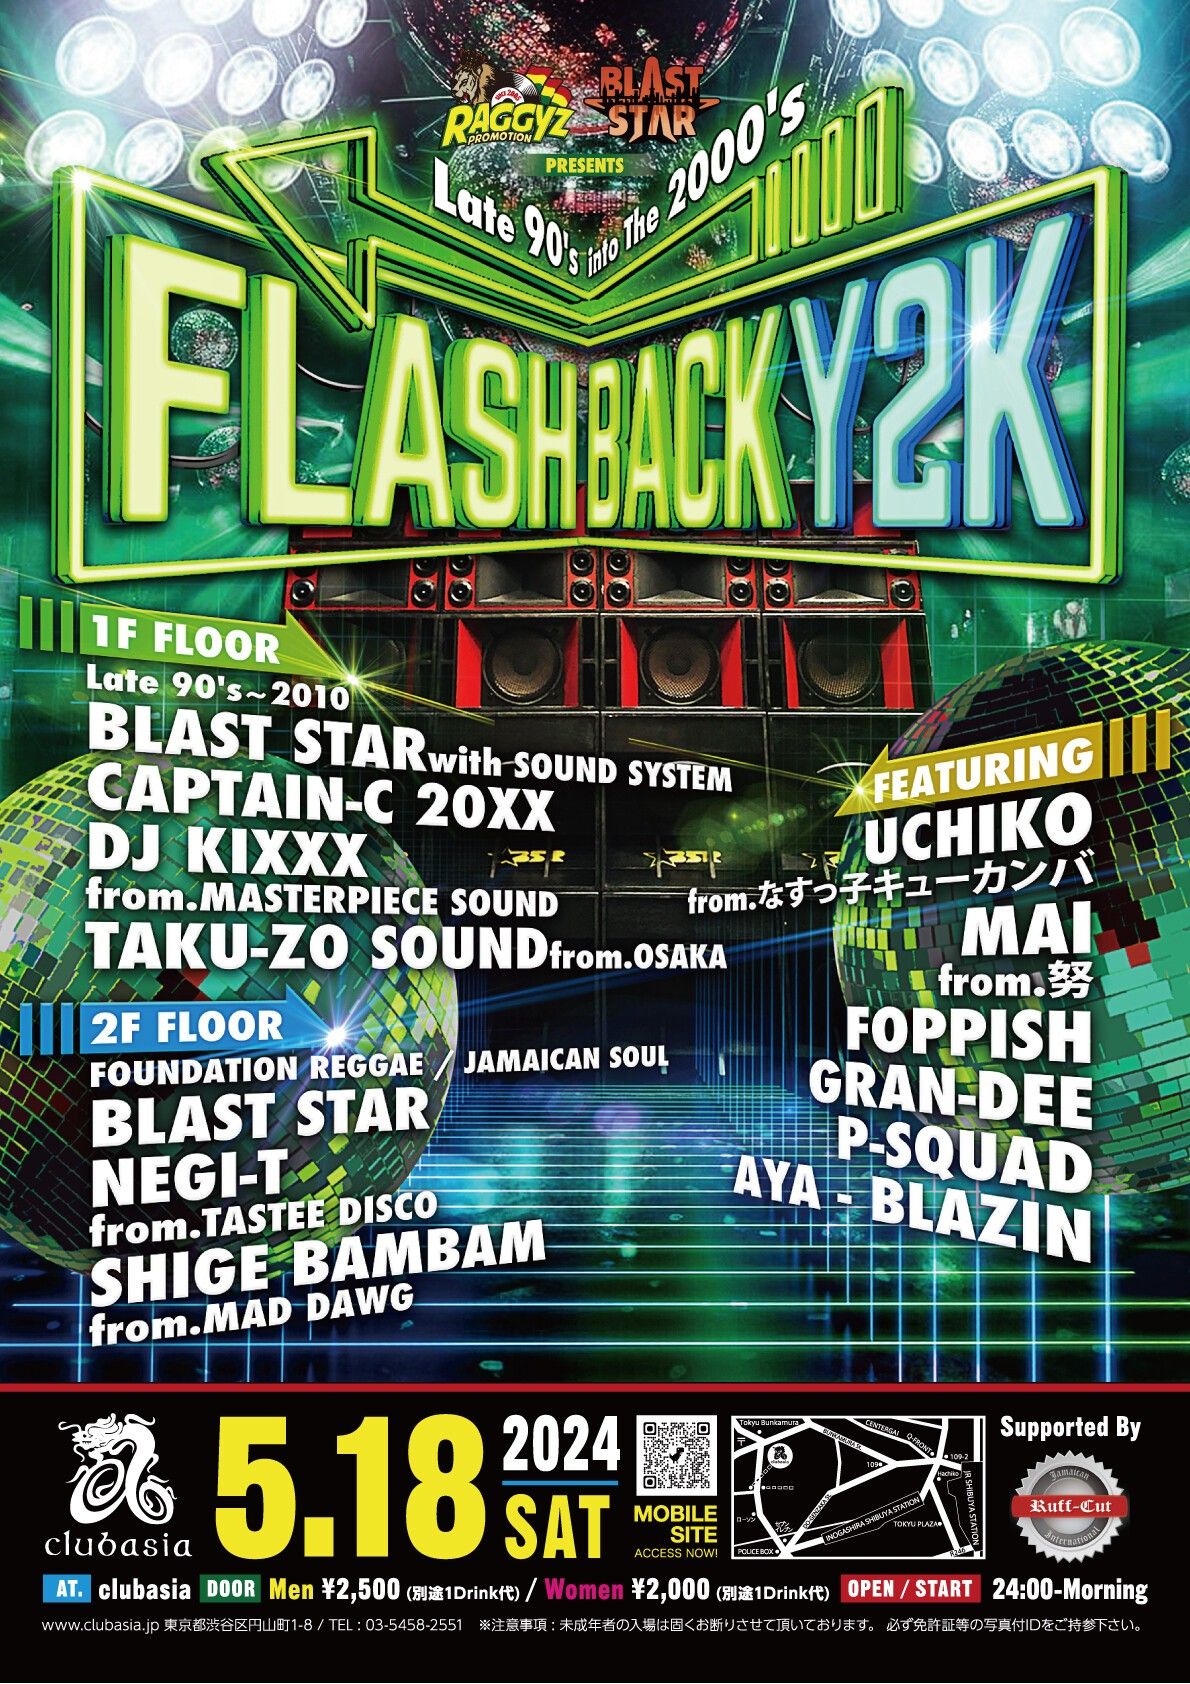 Raggyz Pro. &amp; Blast Star Sound System Presents “FLASH BACK Y2K” – Late 90’s into The 2000’s – Su